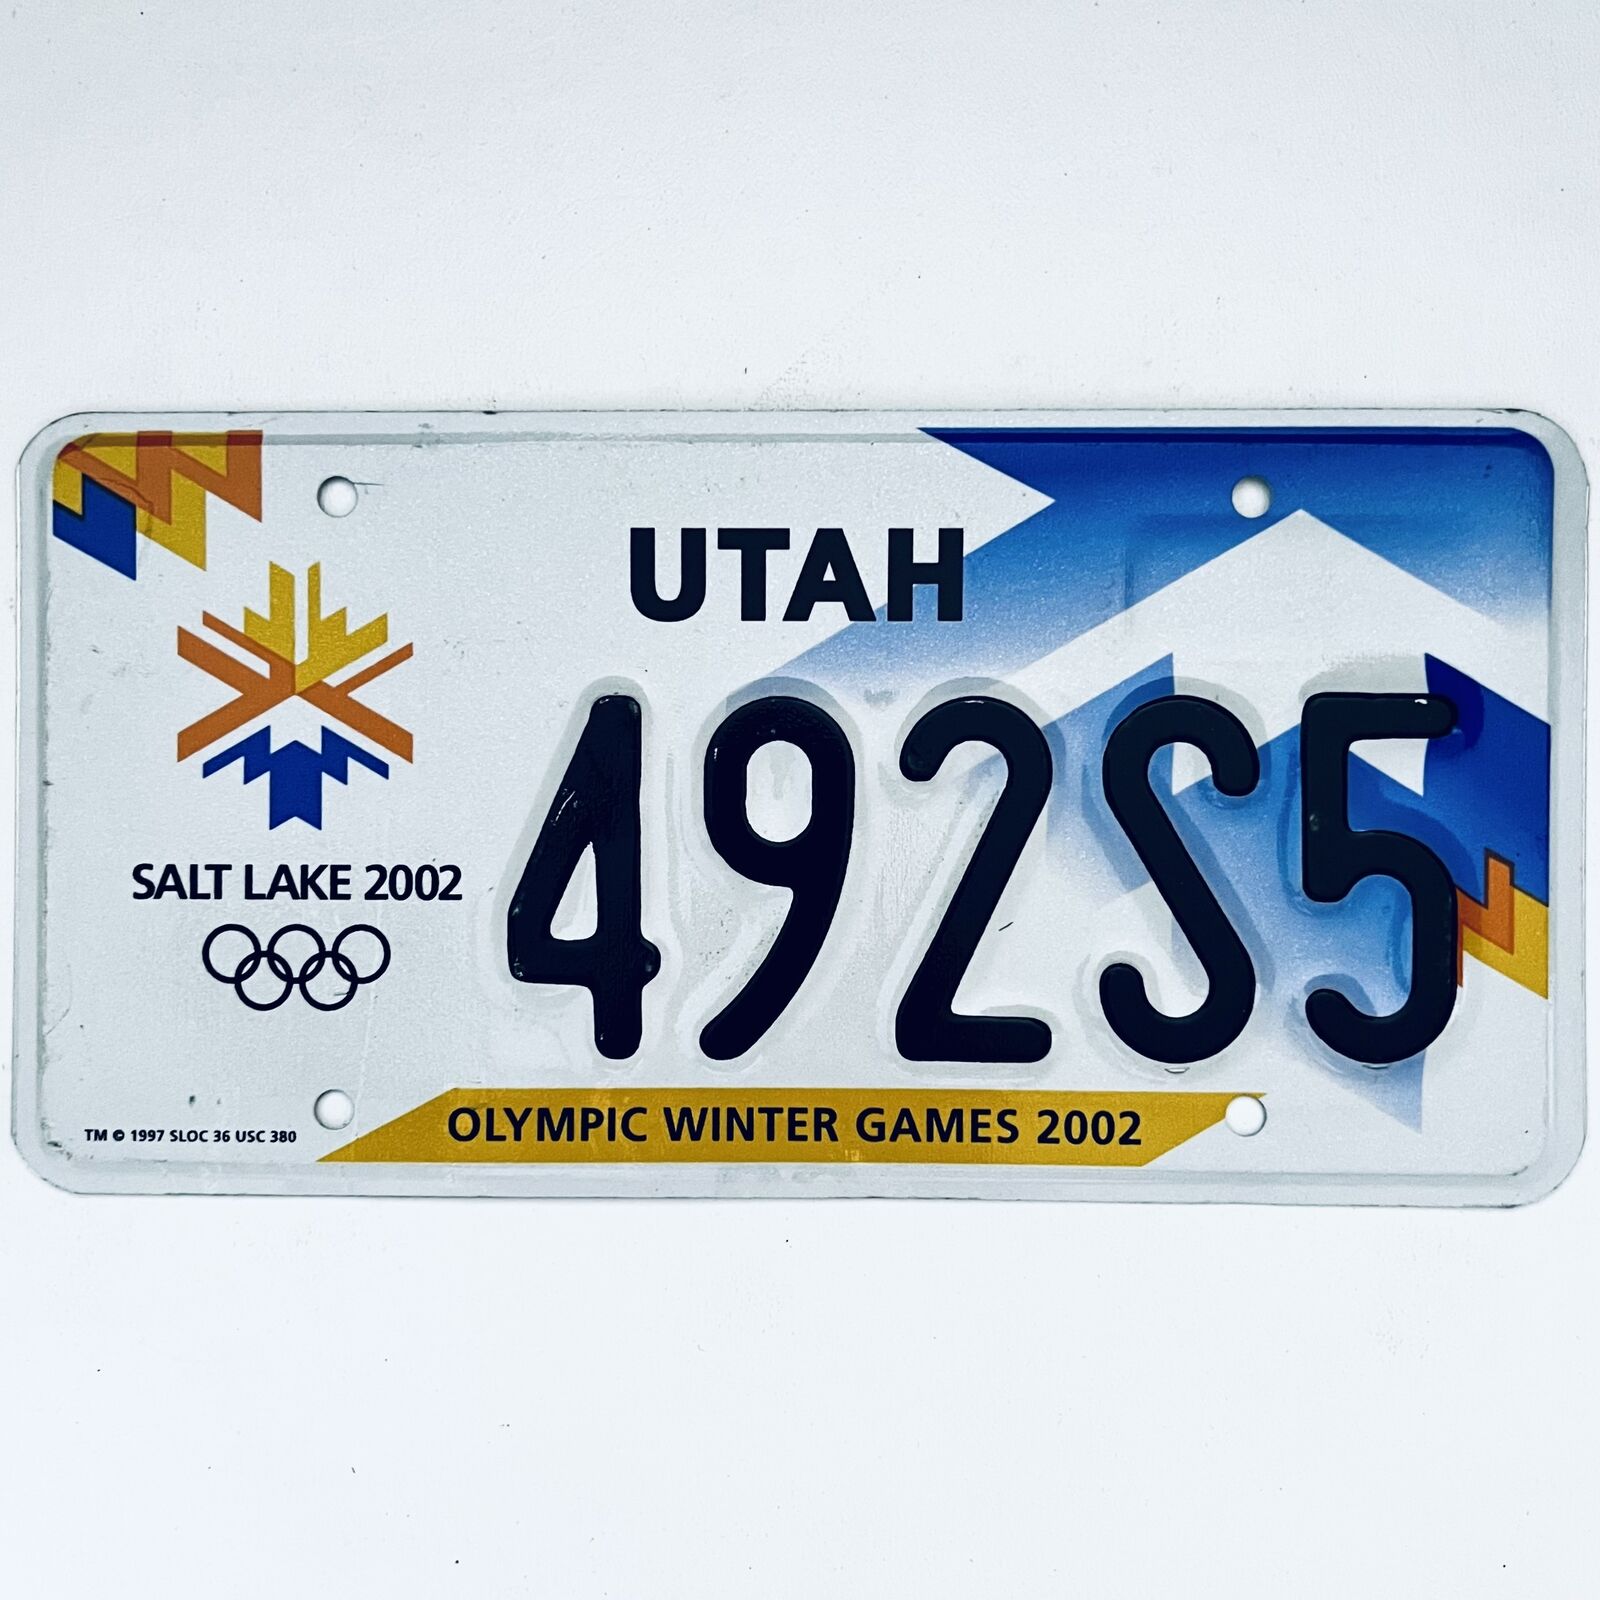 2002 United States Utah Olympic Winter Games Passenger License Plate 492s5